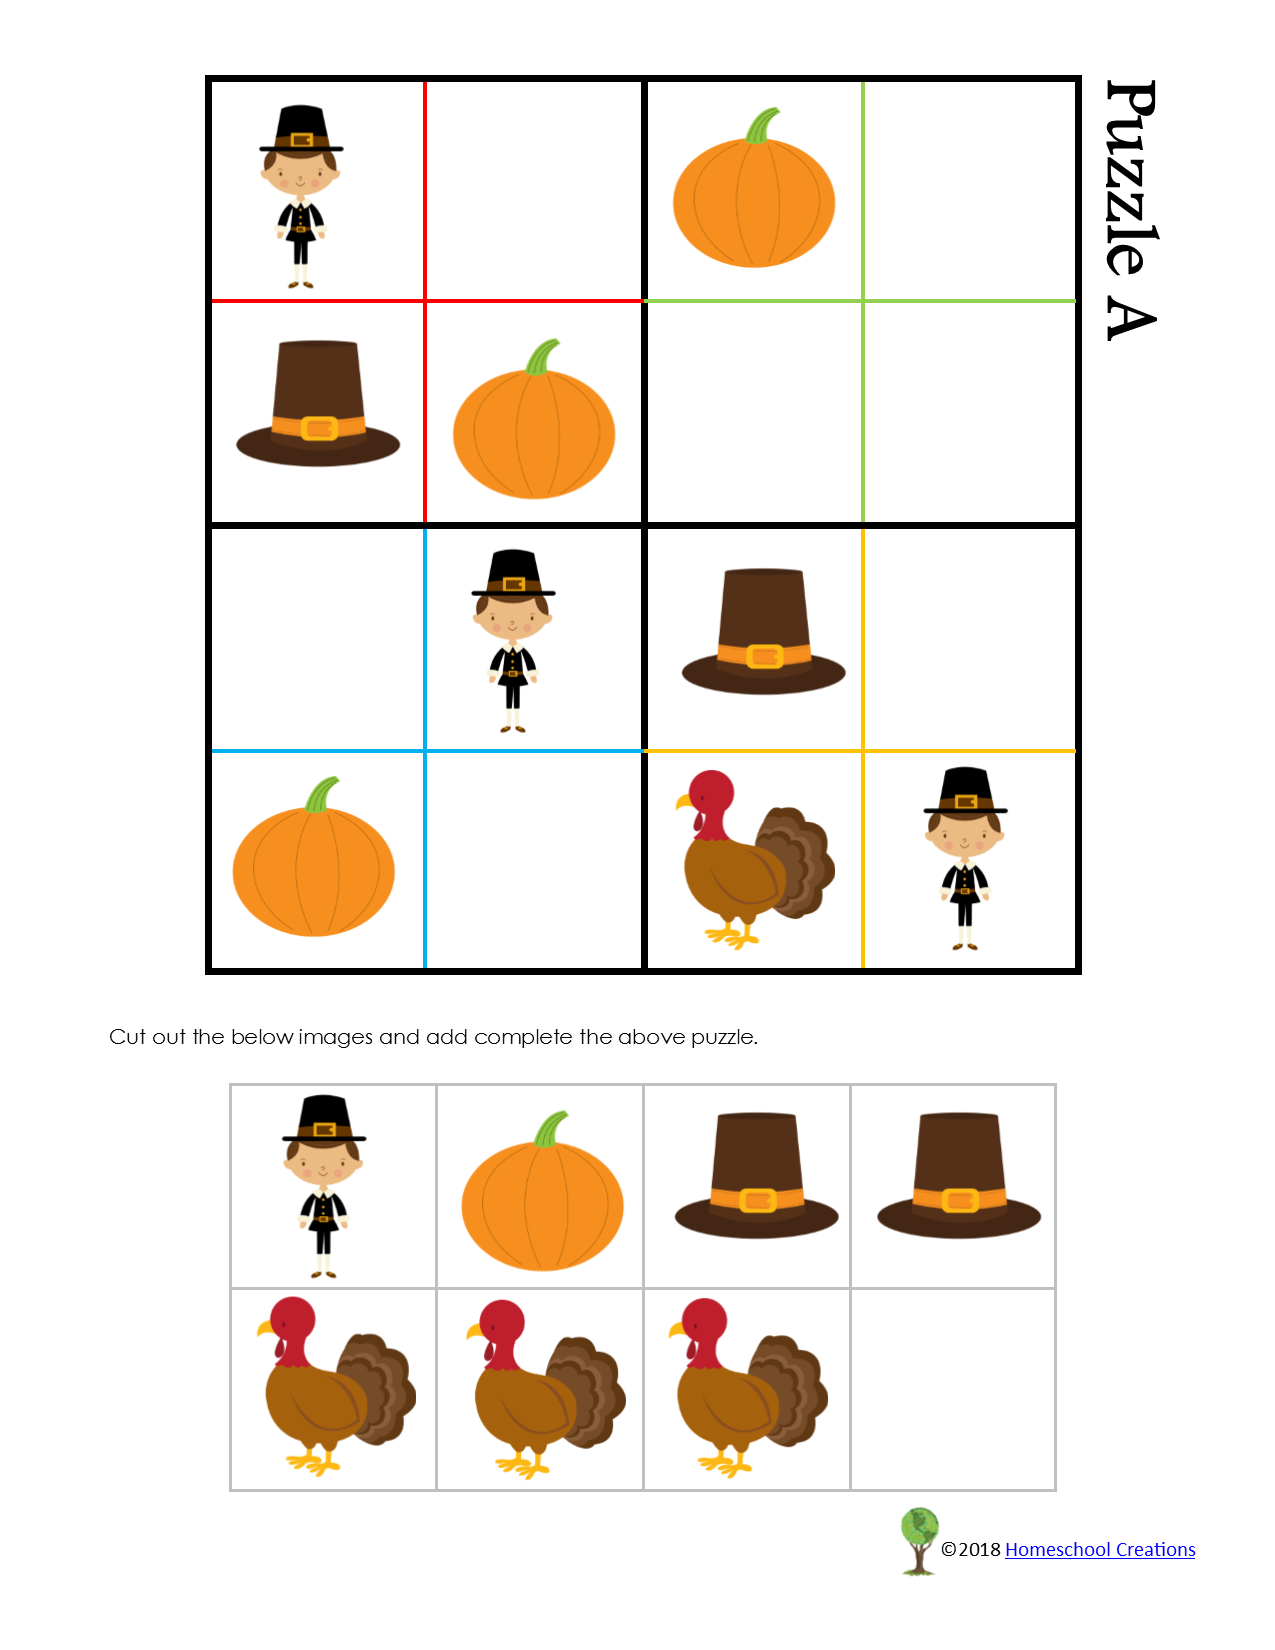 Difficult Thanksgiving Sudoku Printable